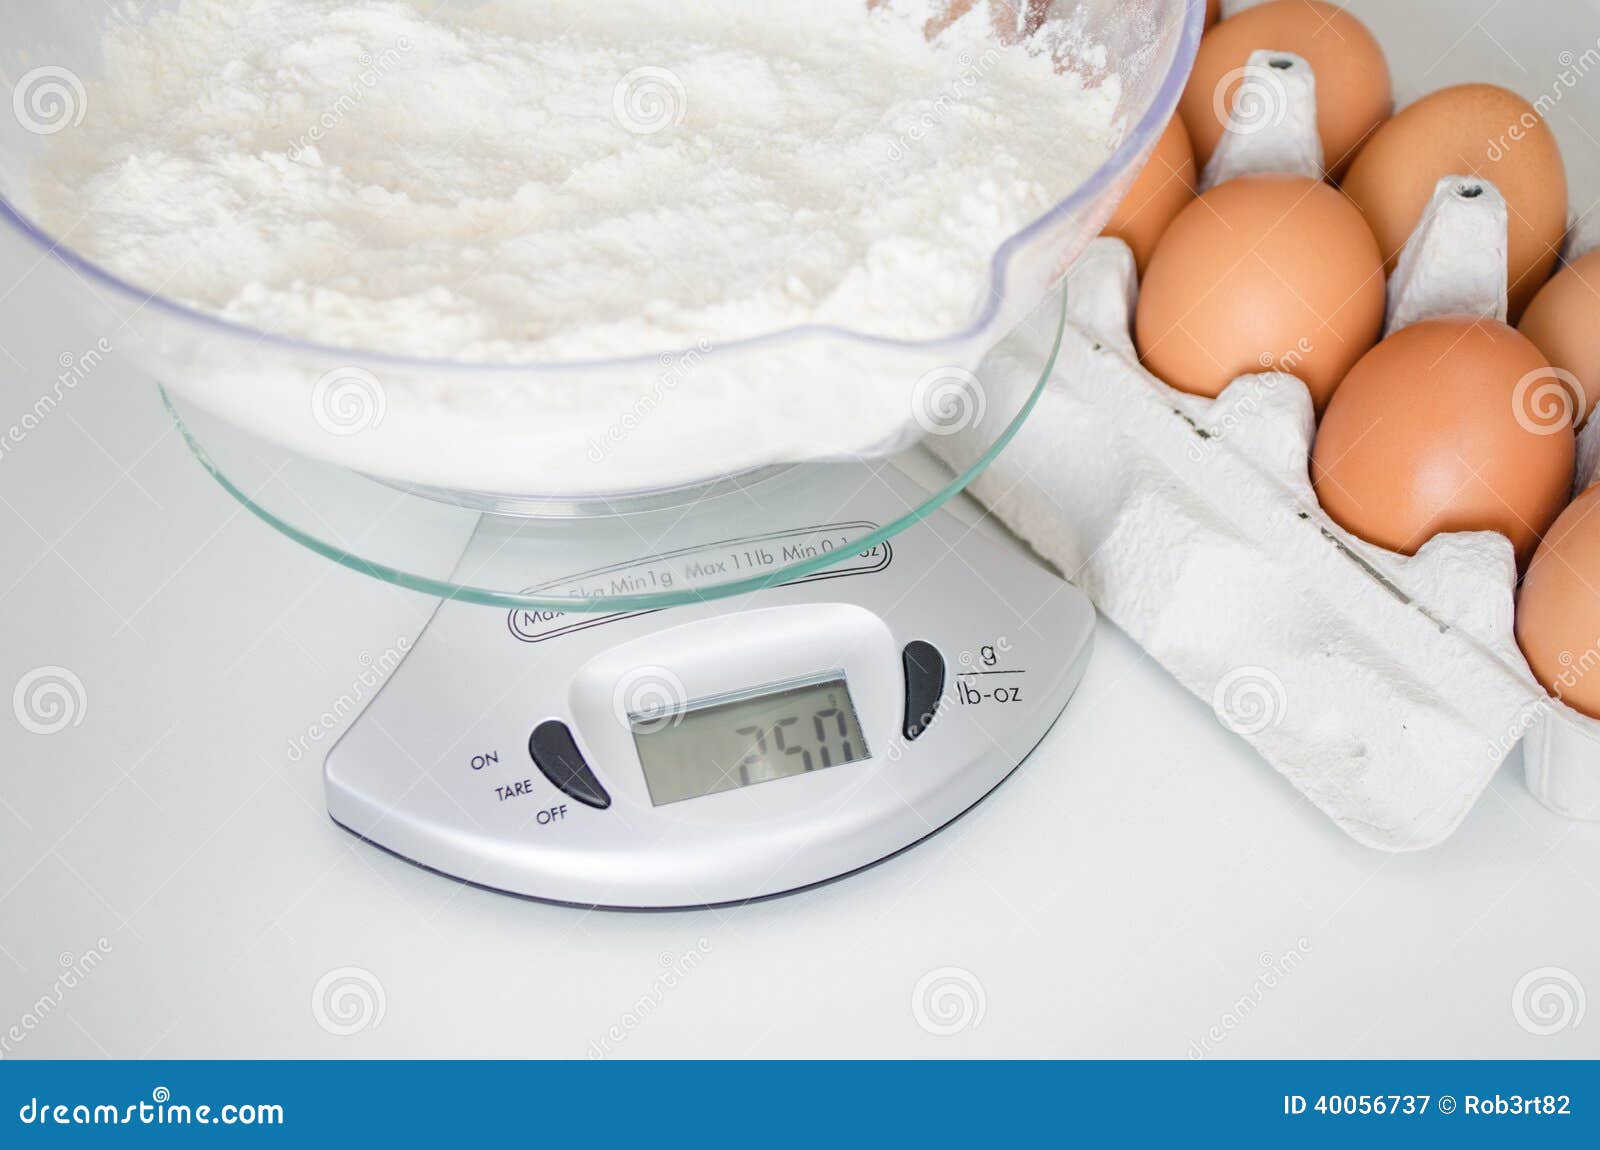 https://thumbs.dreamstime.com/z/weighing-flour-scales-togheter-set-eggs-40056737.jpg